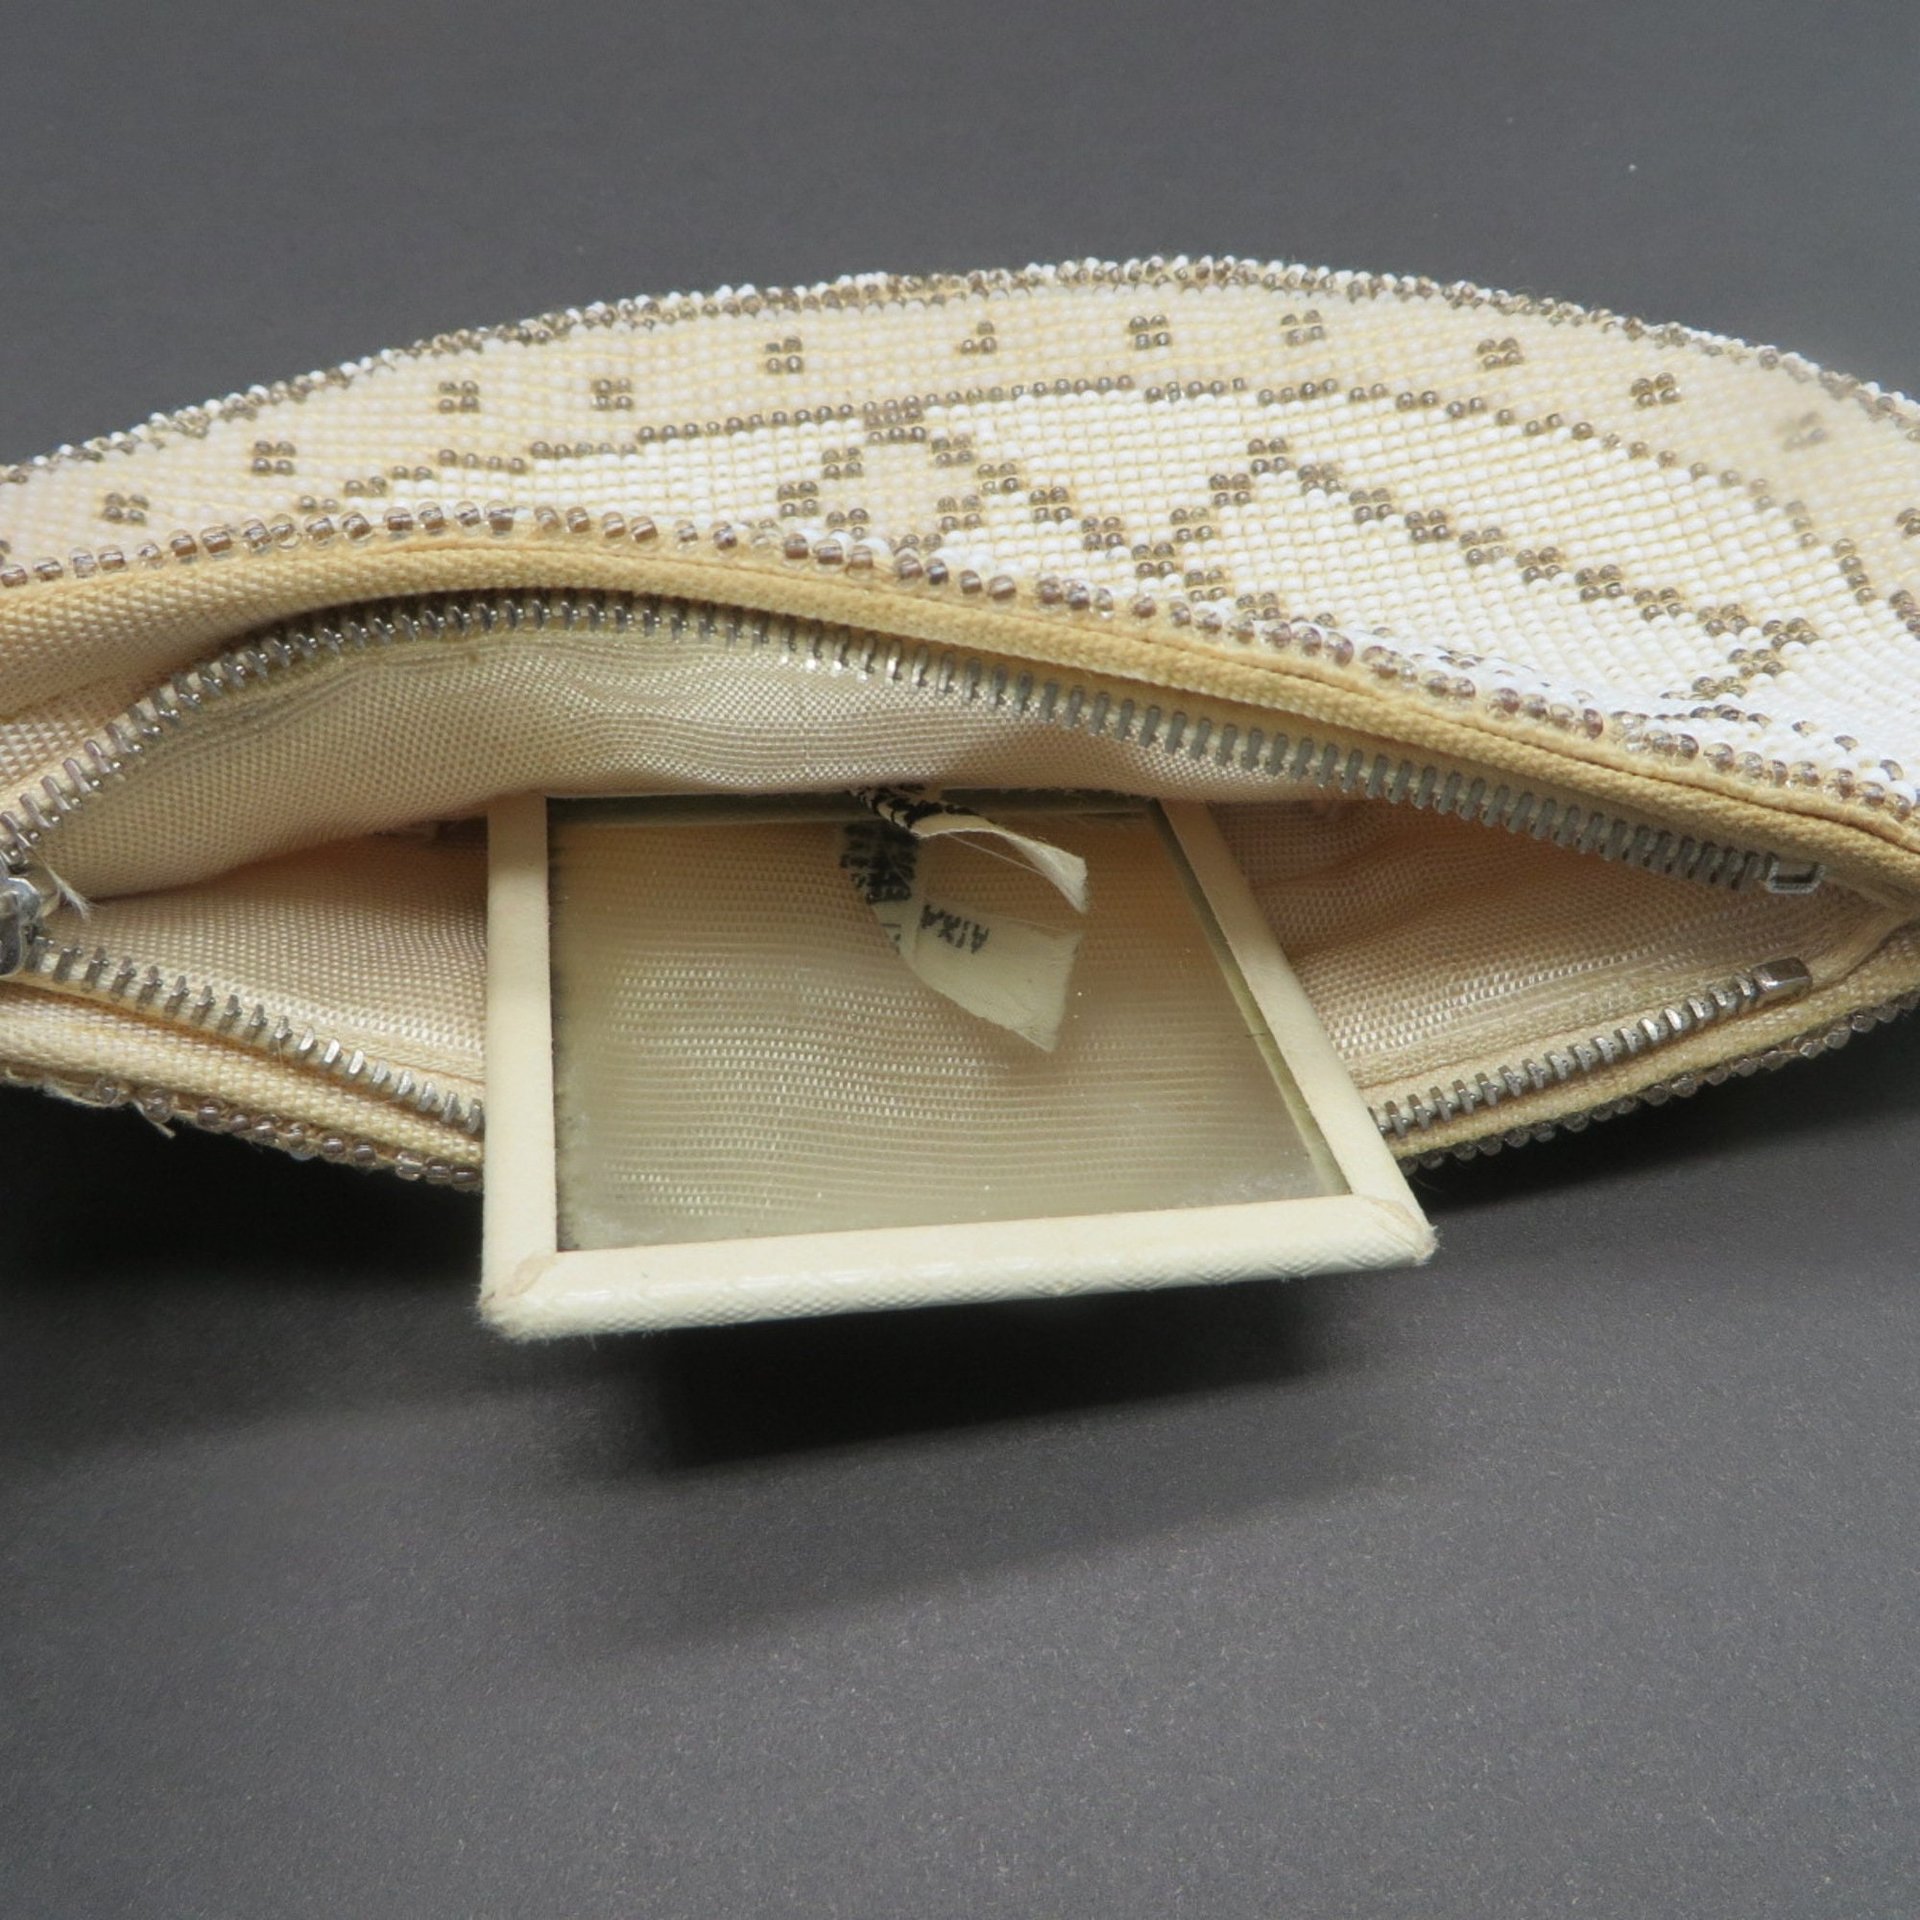 Art Deco Clutch Purse, Cream Beaded Evening Bag w/Mirror